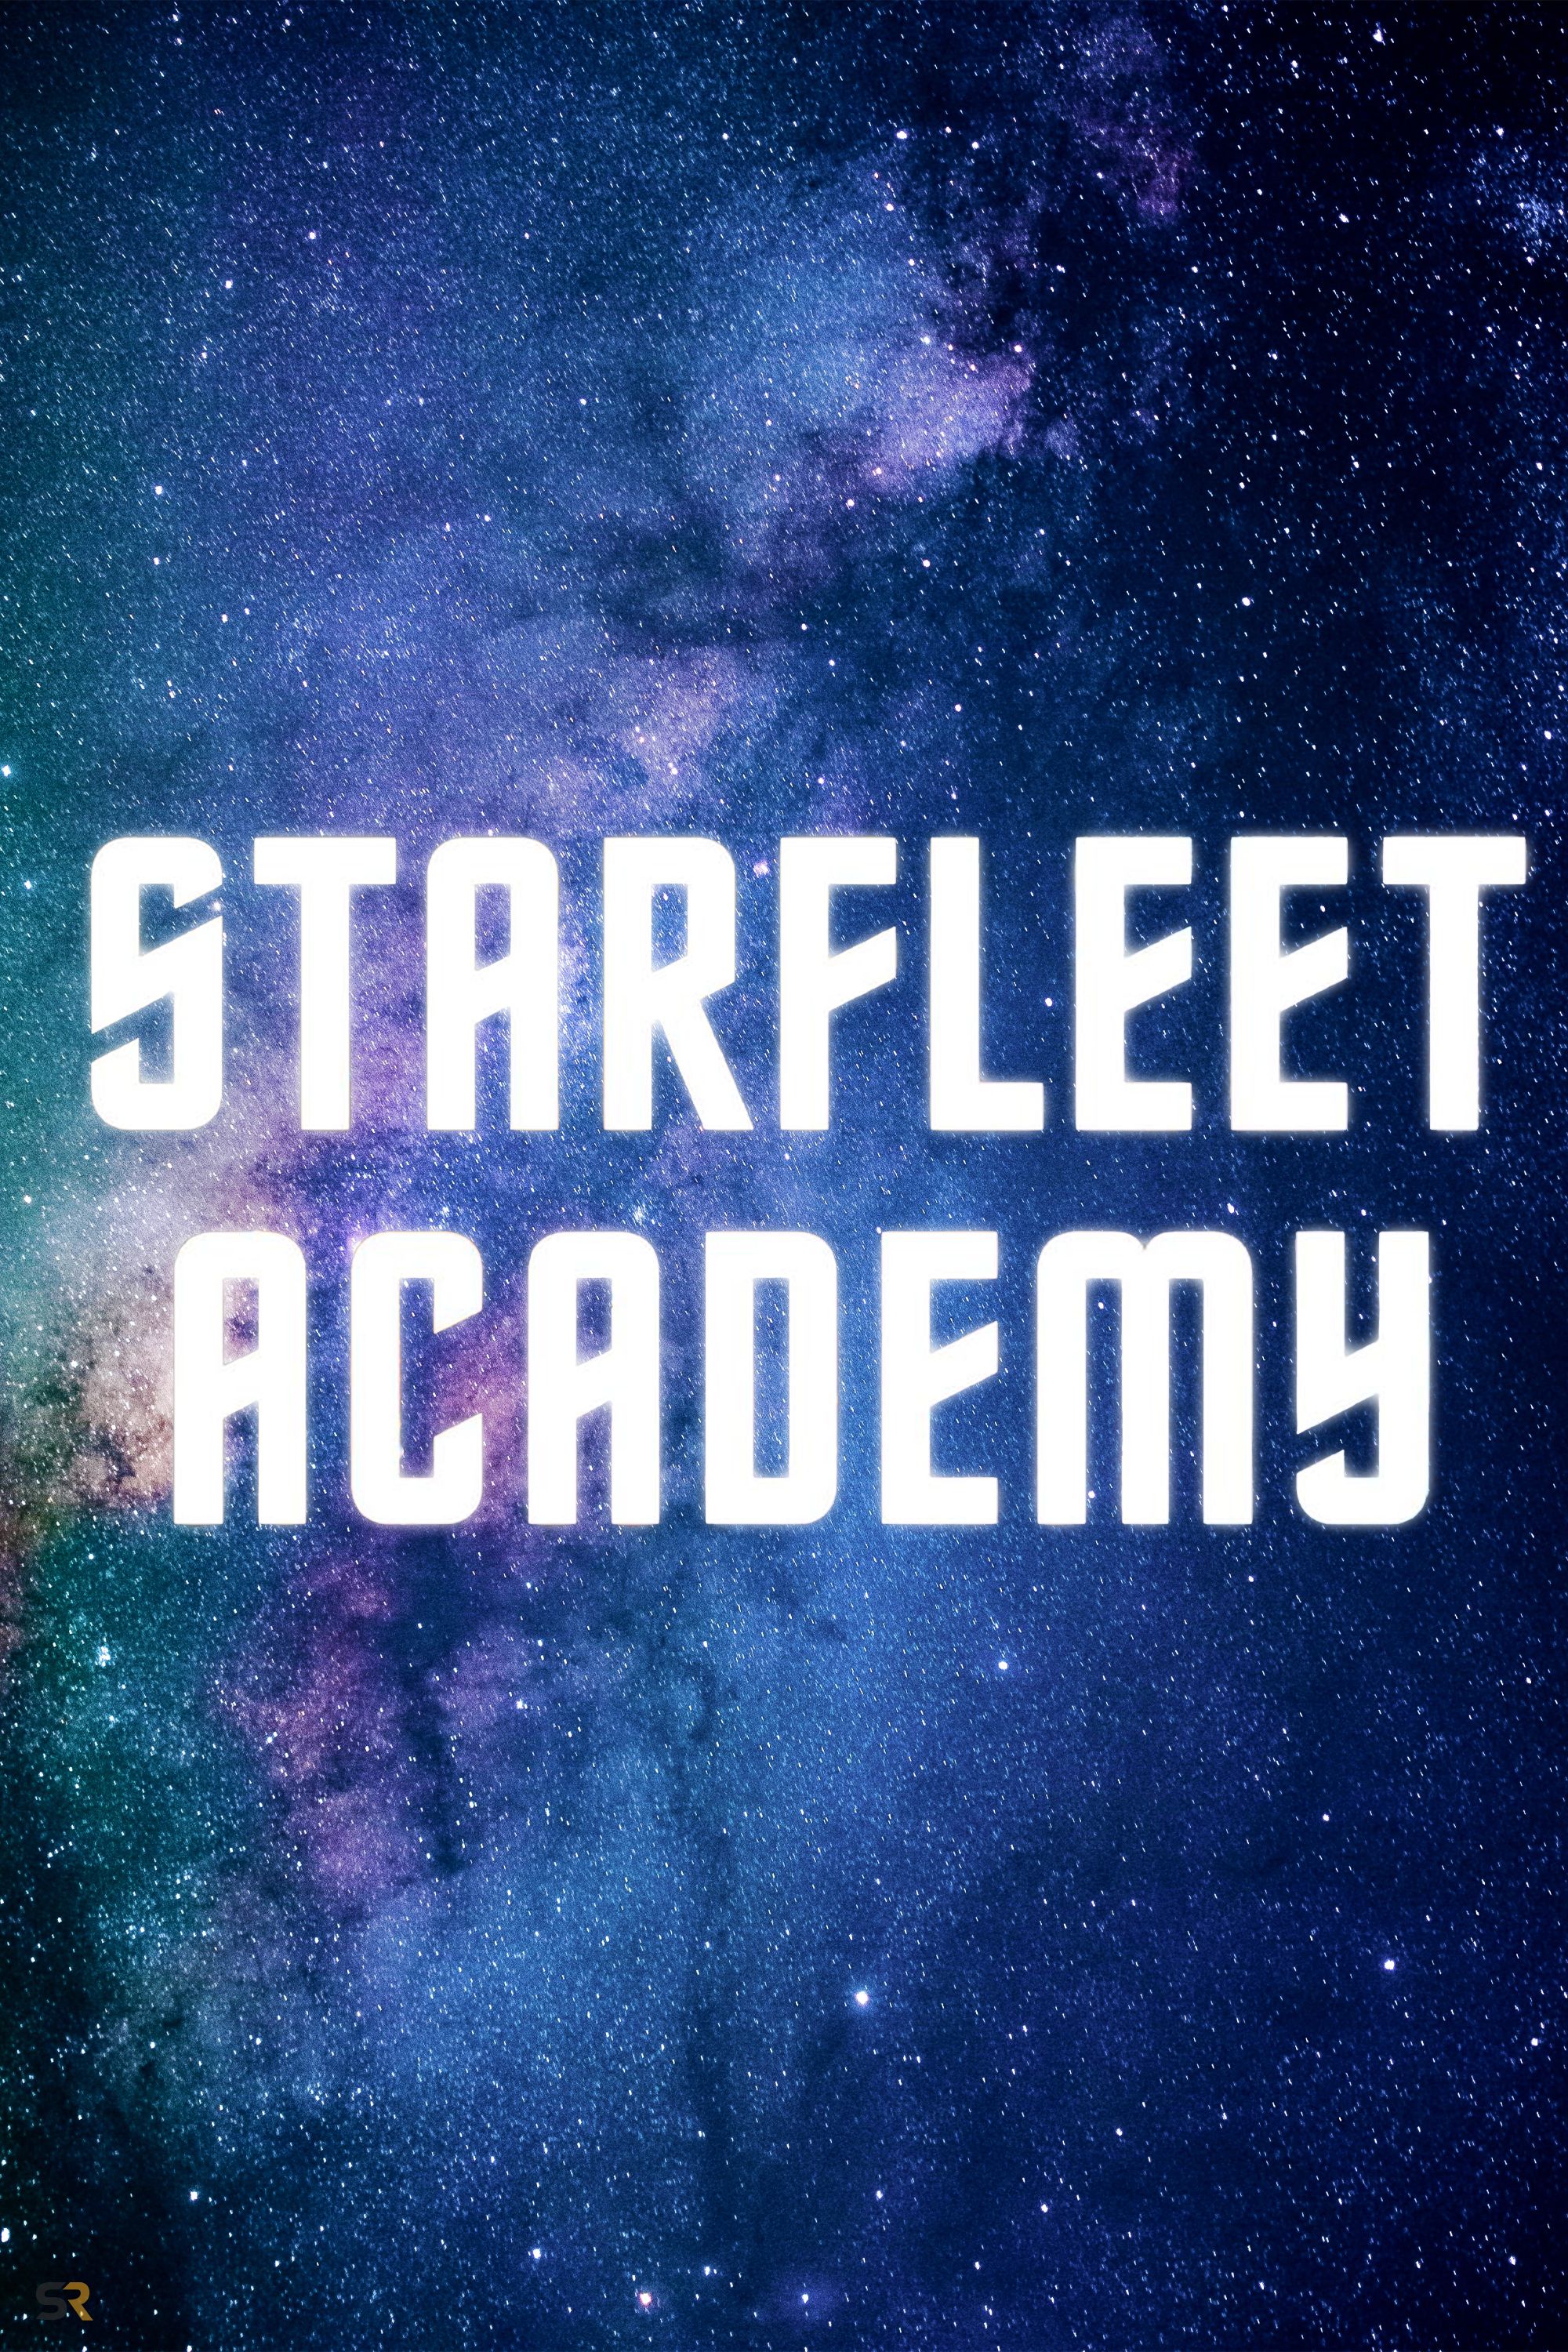 Tawny Newsome Says Starfleet Academy Series Is “A New Side of Star Trek”